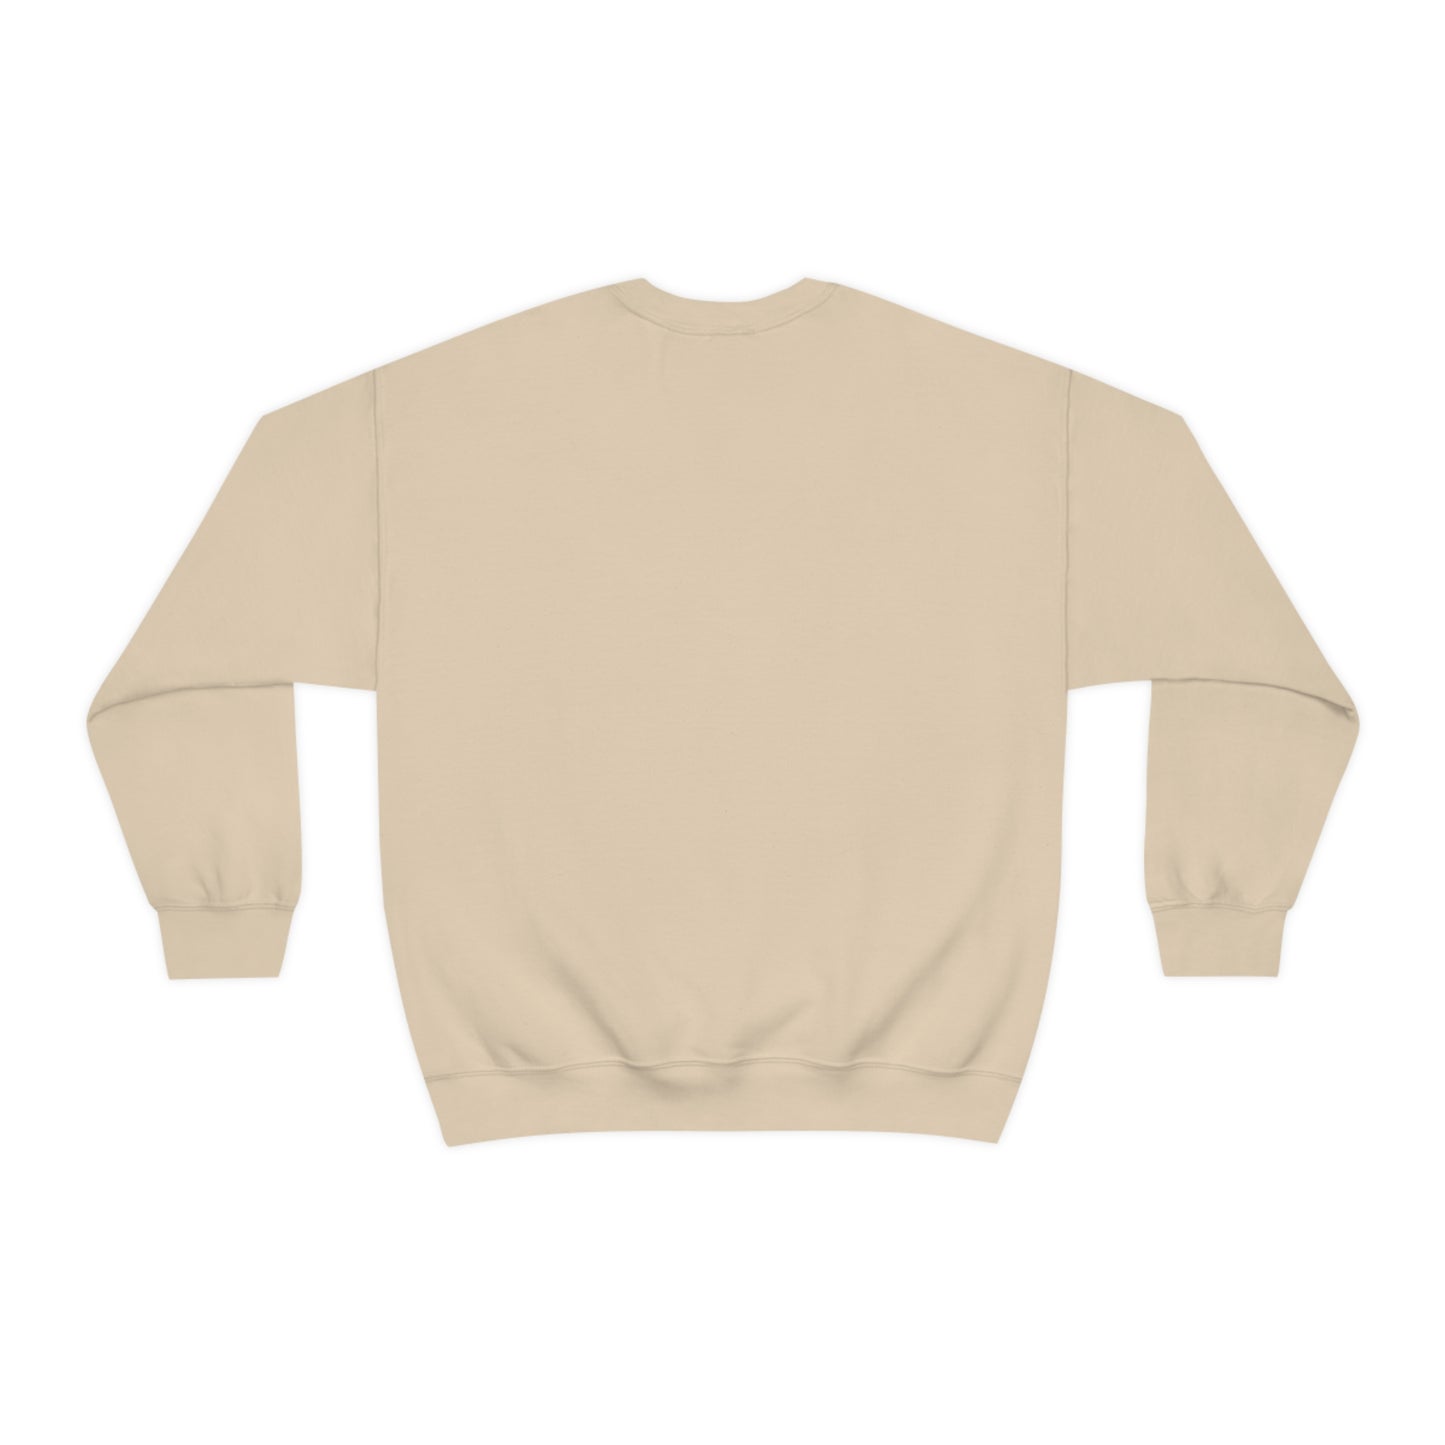 Sweatshirt classique | FFANE 40ème